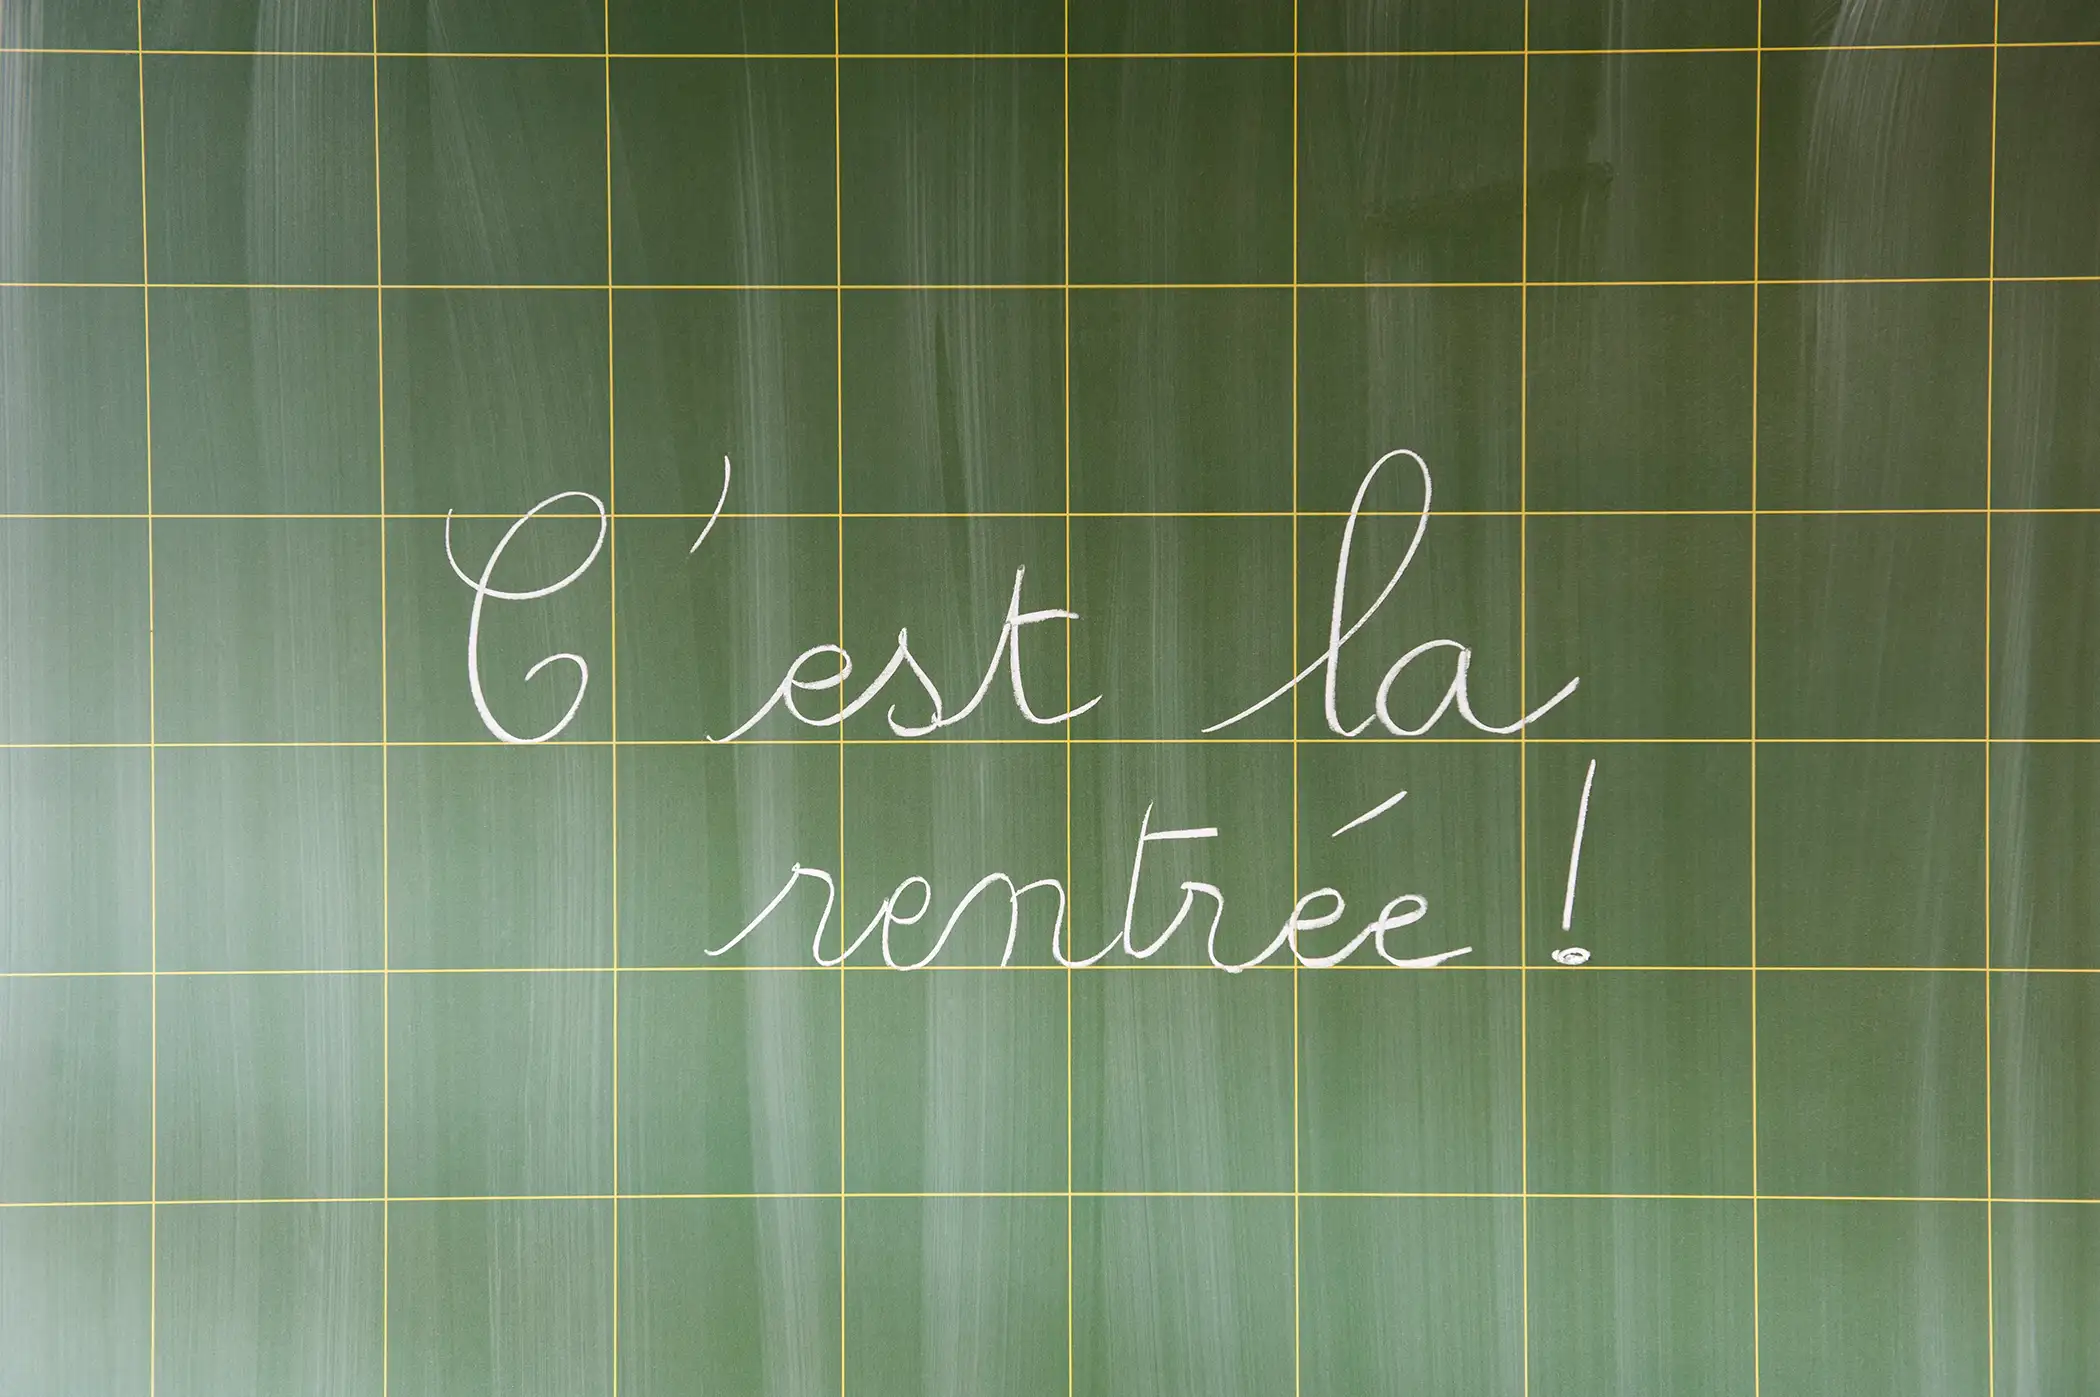 Back to School in French on chalkboard